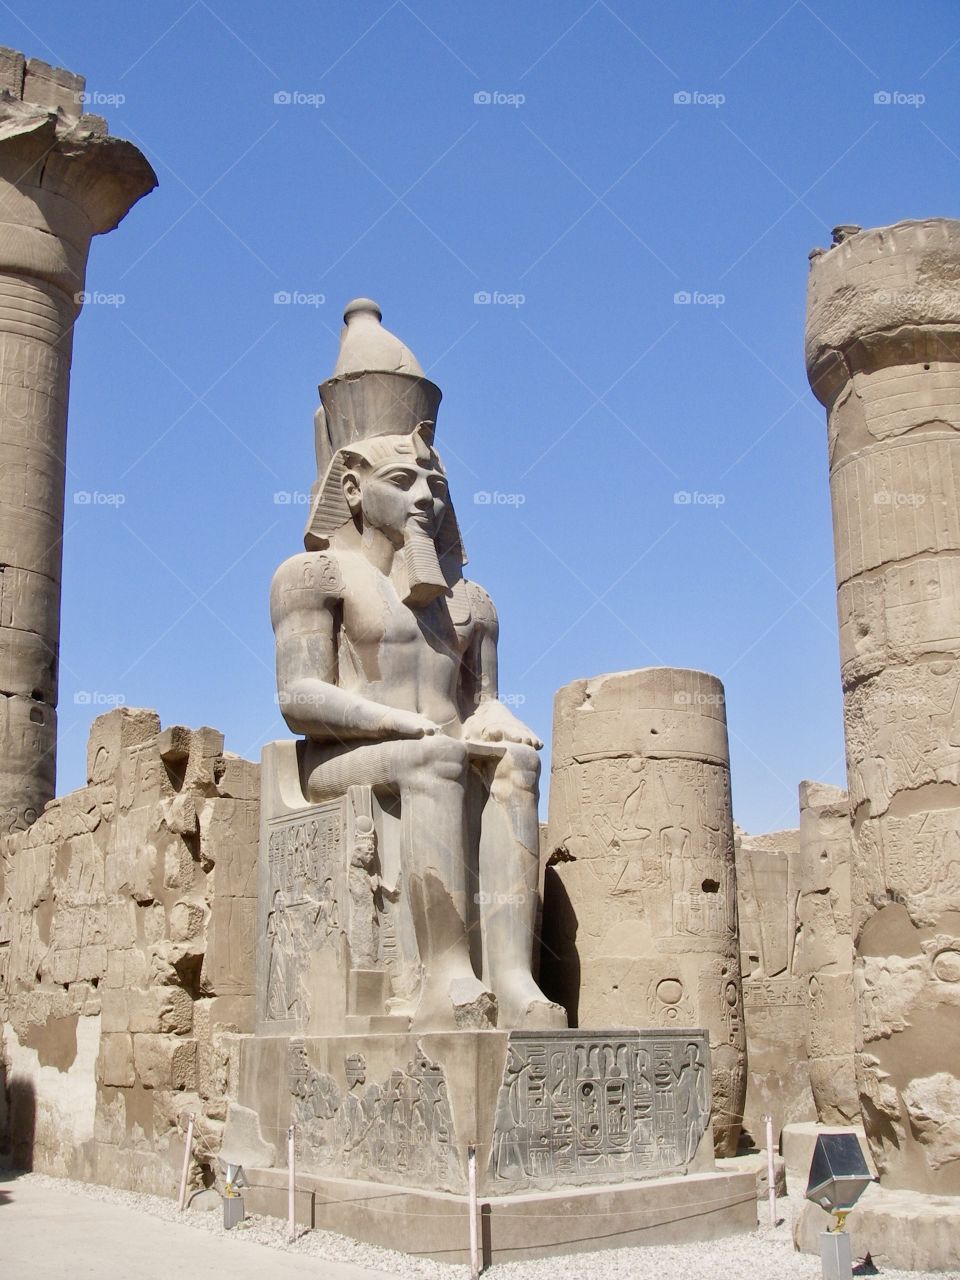 Pharaoh and columns, Egypt 